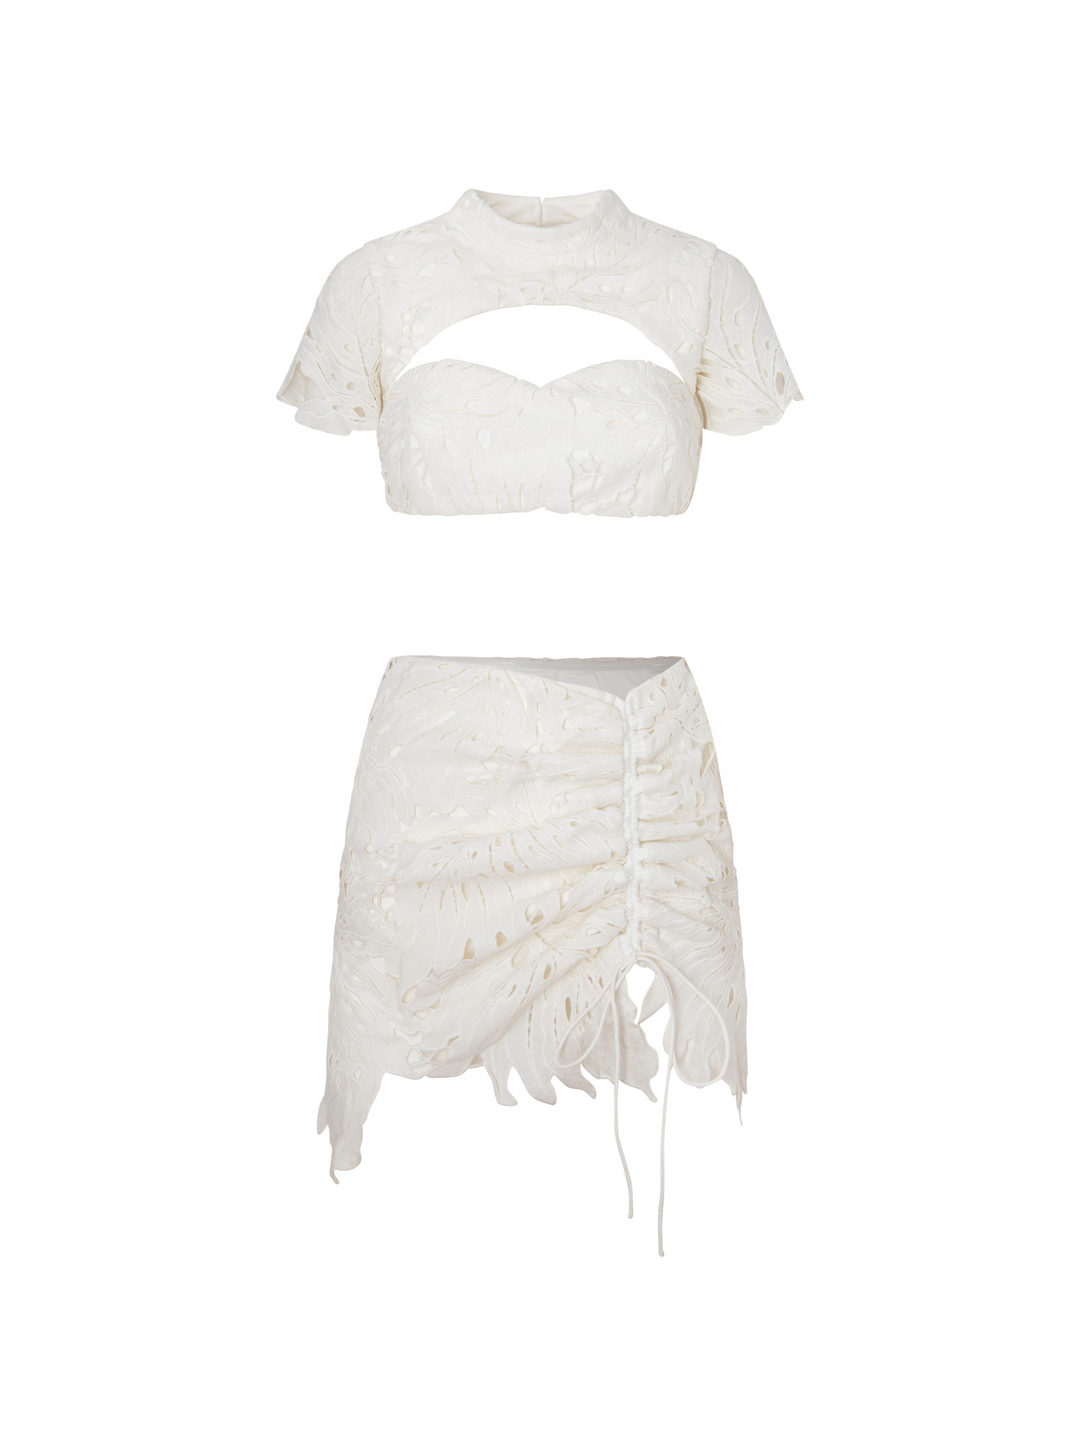 "Gardenia" Skirt, Bandeau and Sleeves 3 Piece Set - White